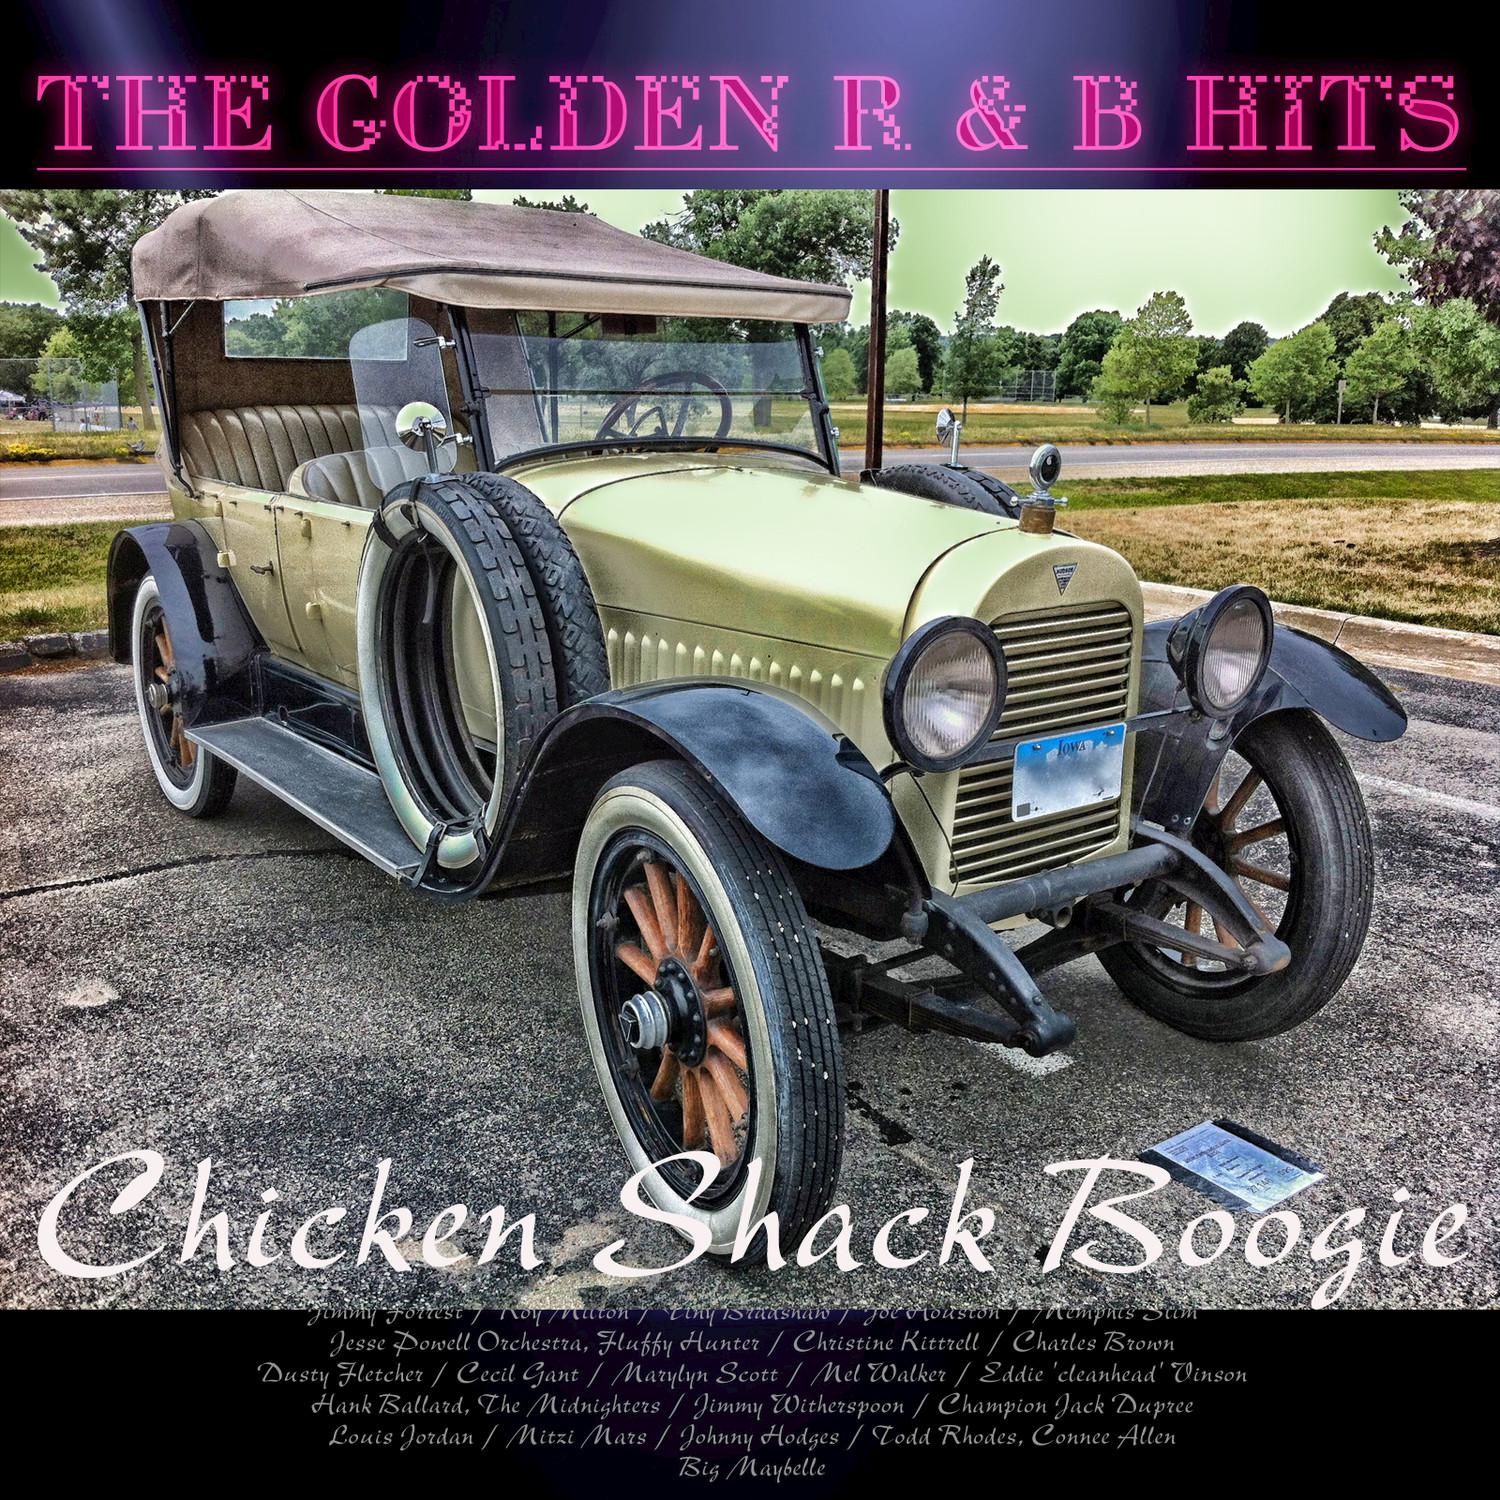 The Golden R & B Hits: Chicken Shack Boogie